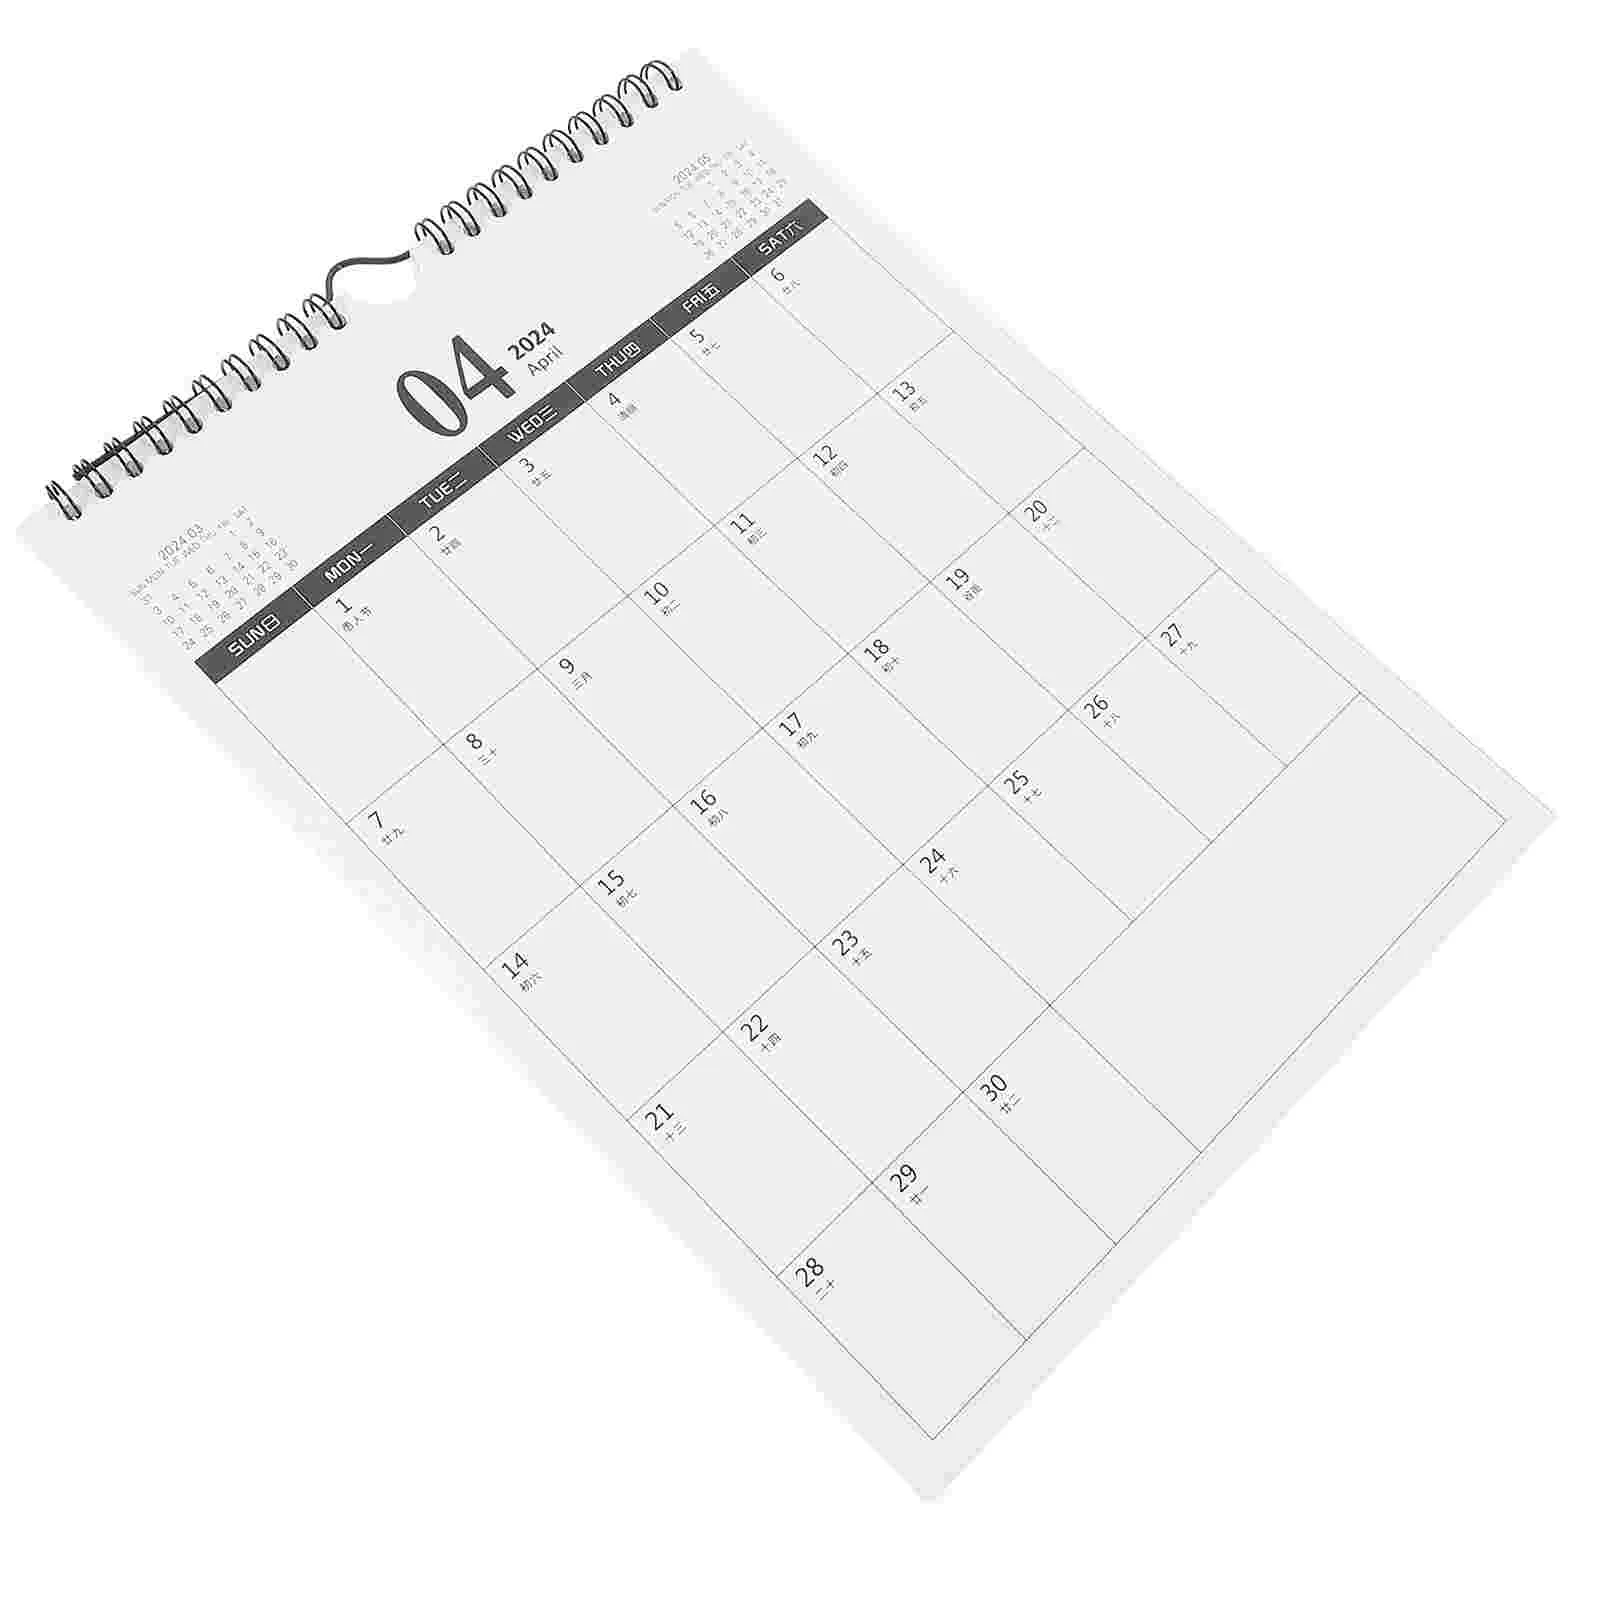 Wall Calendar Simple Style Calendar Office Planner This Spiral Bound Calendar Calendar Wall Decoration Fortune Cat Style